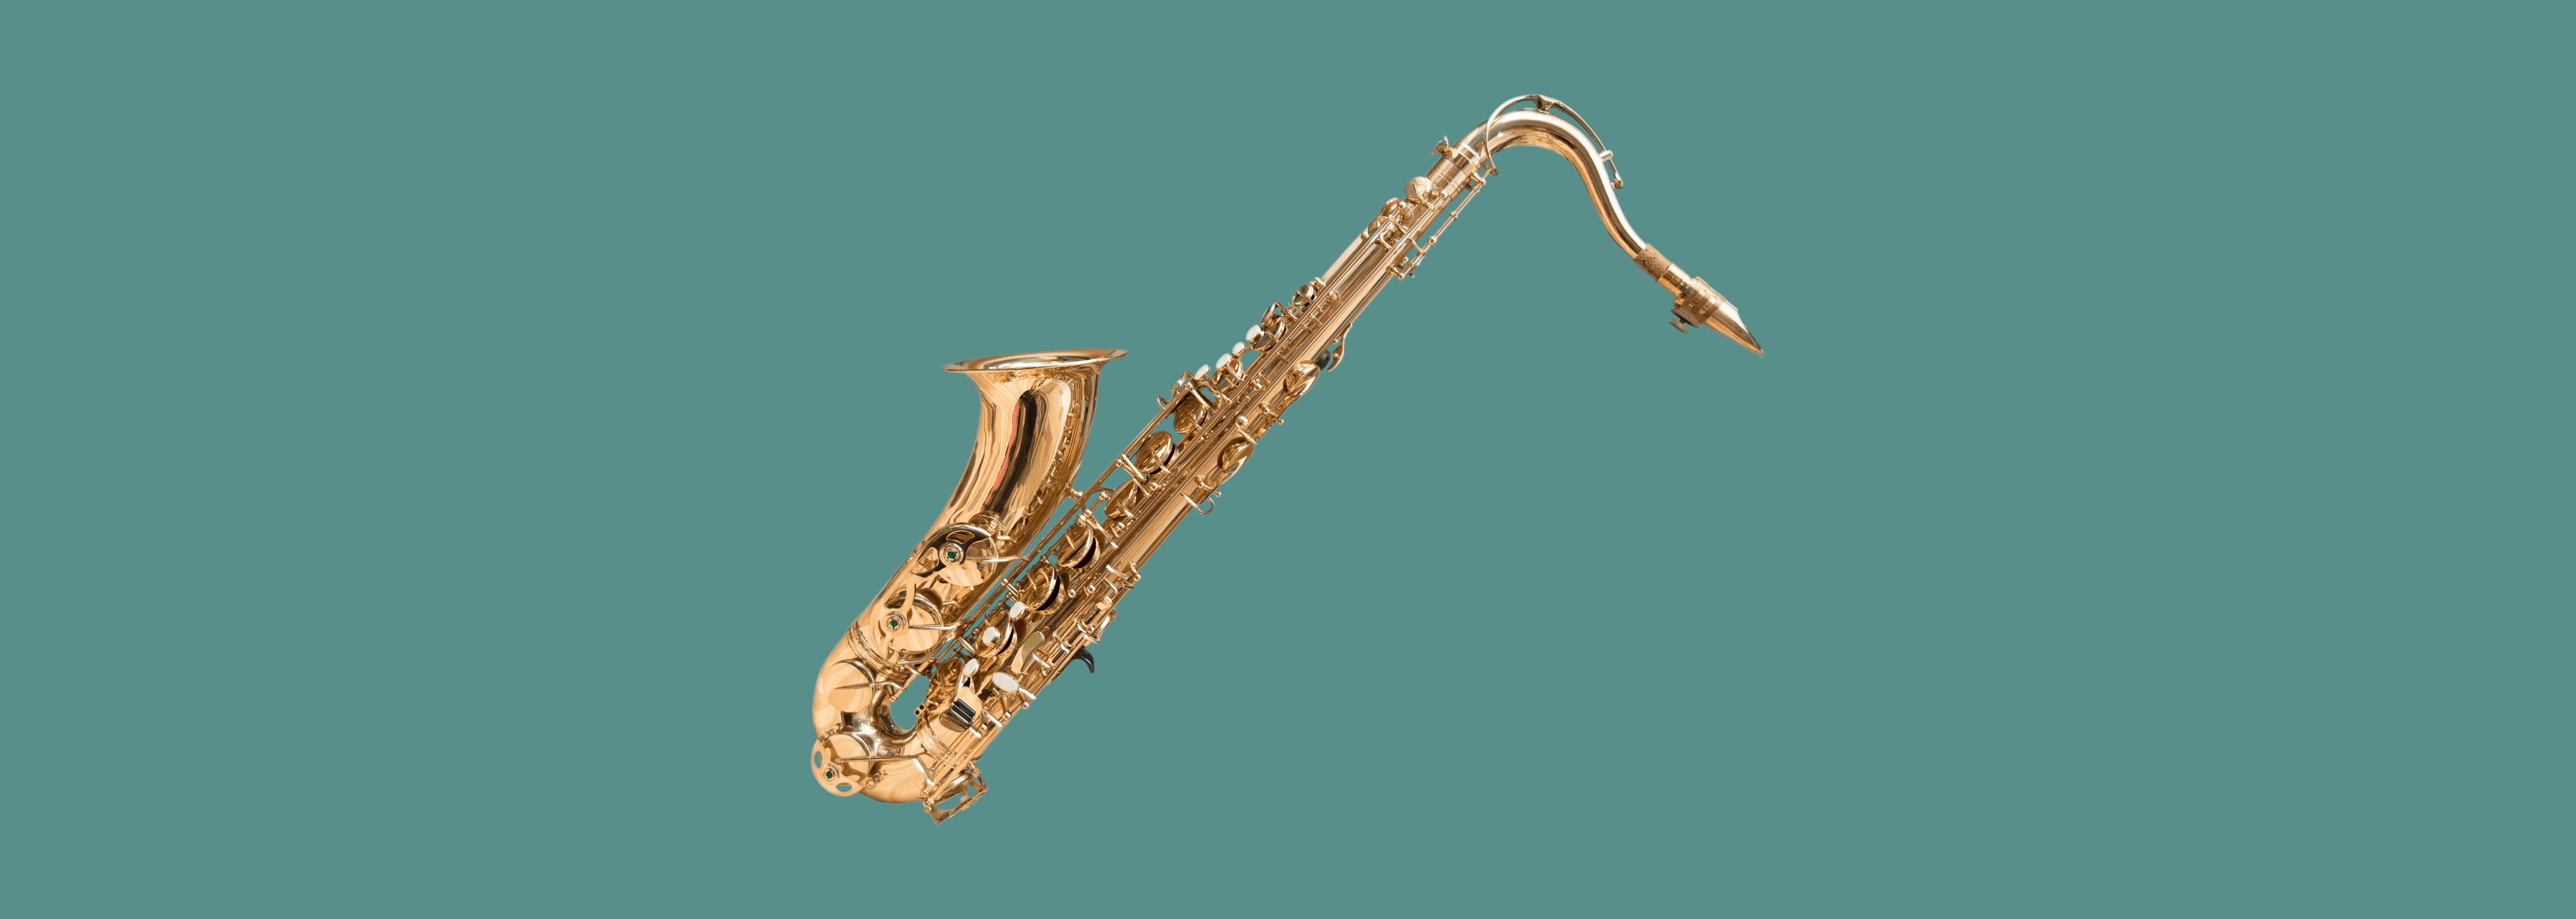 Soundpaint Tenor Saxophone - Soundpaint Tenor Saxophone with